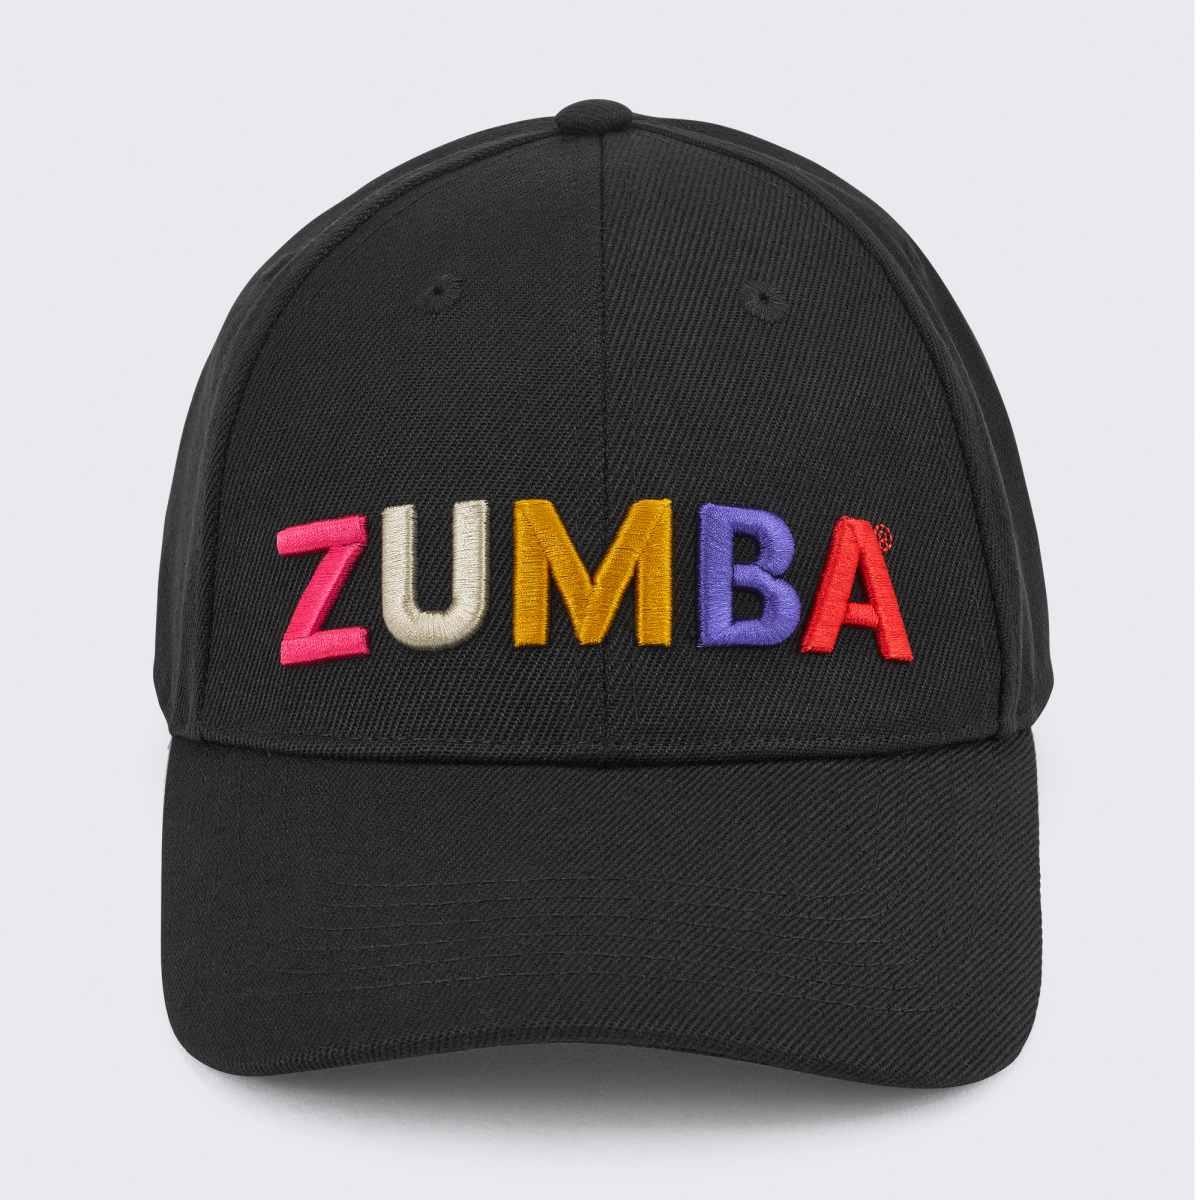 Zumba Lovin' Dad Hat